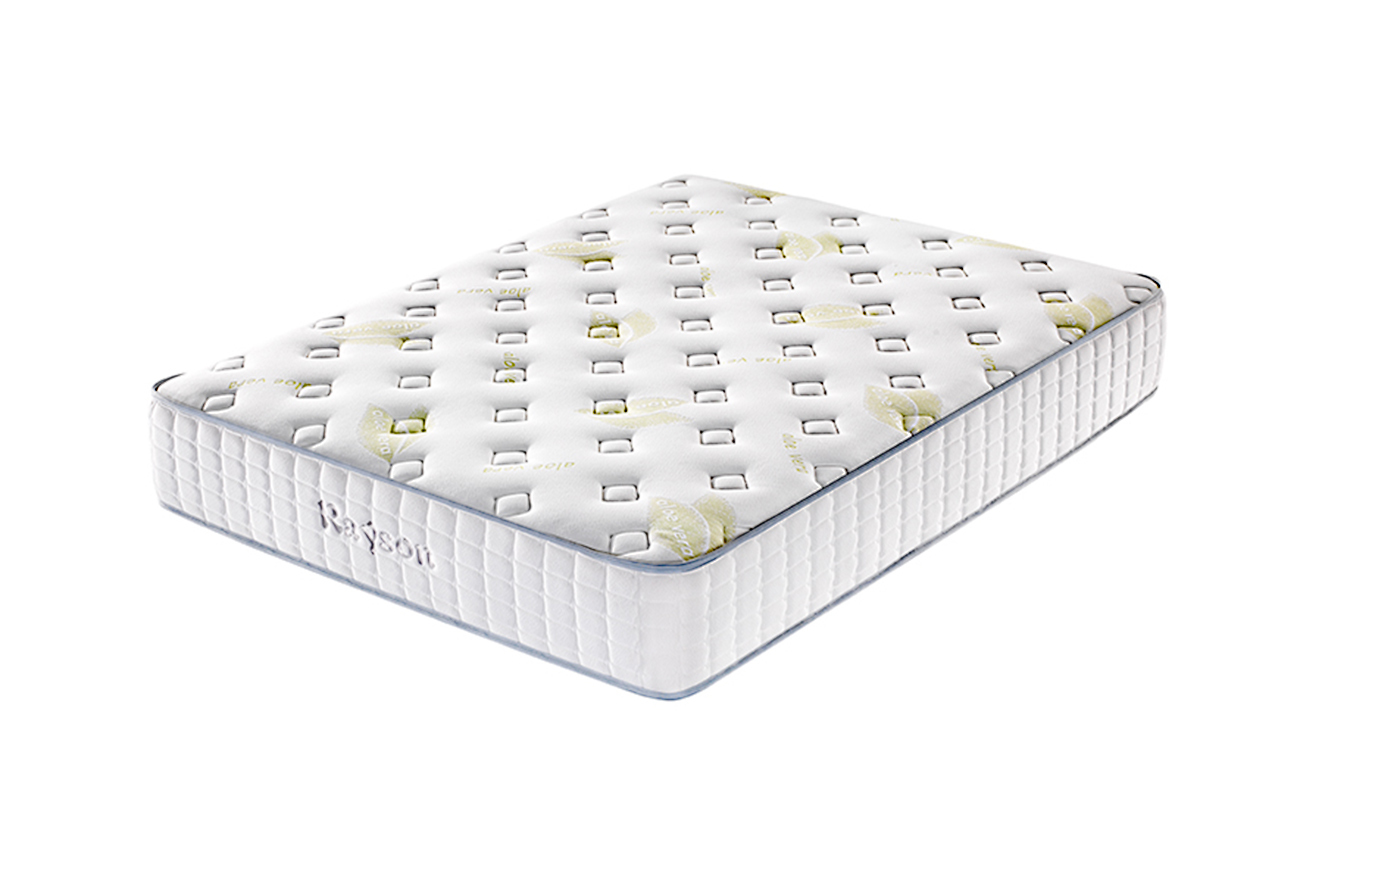 two pocket spring mattress 5zone size Synwin company